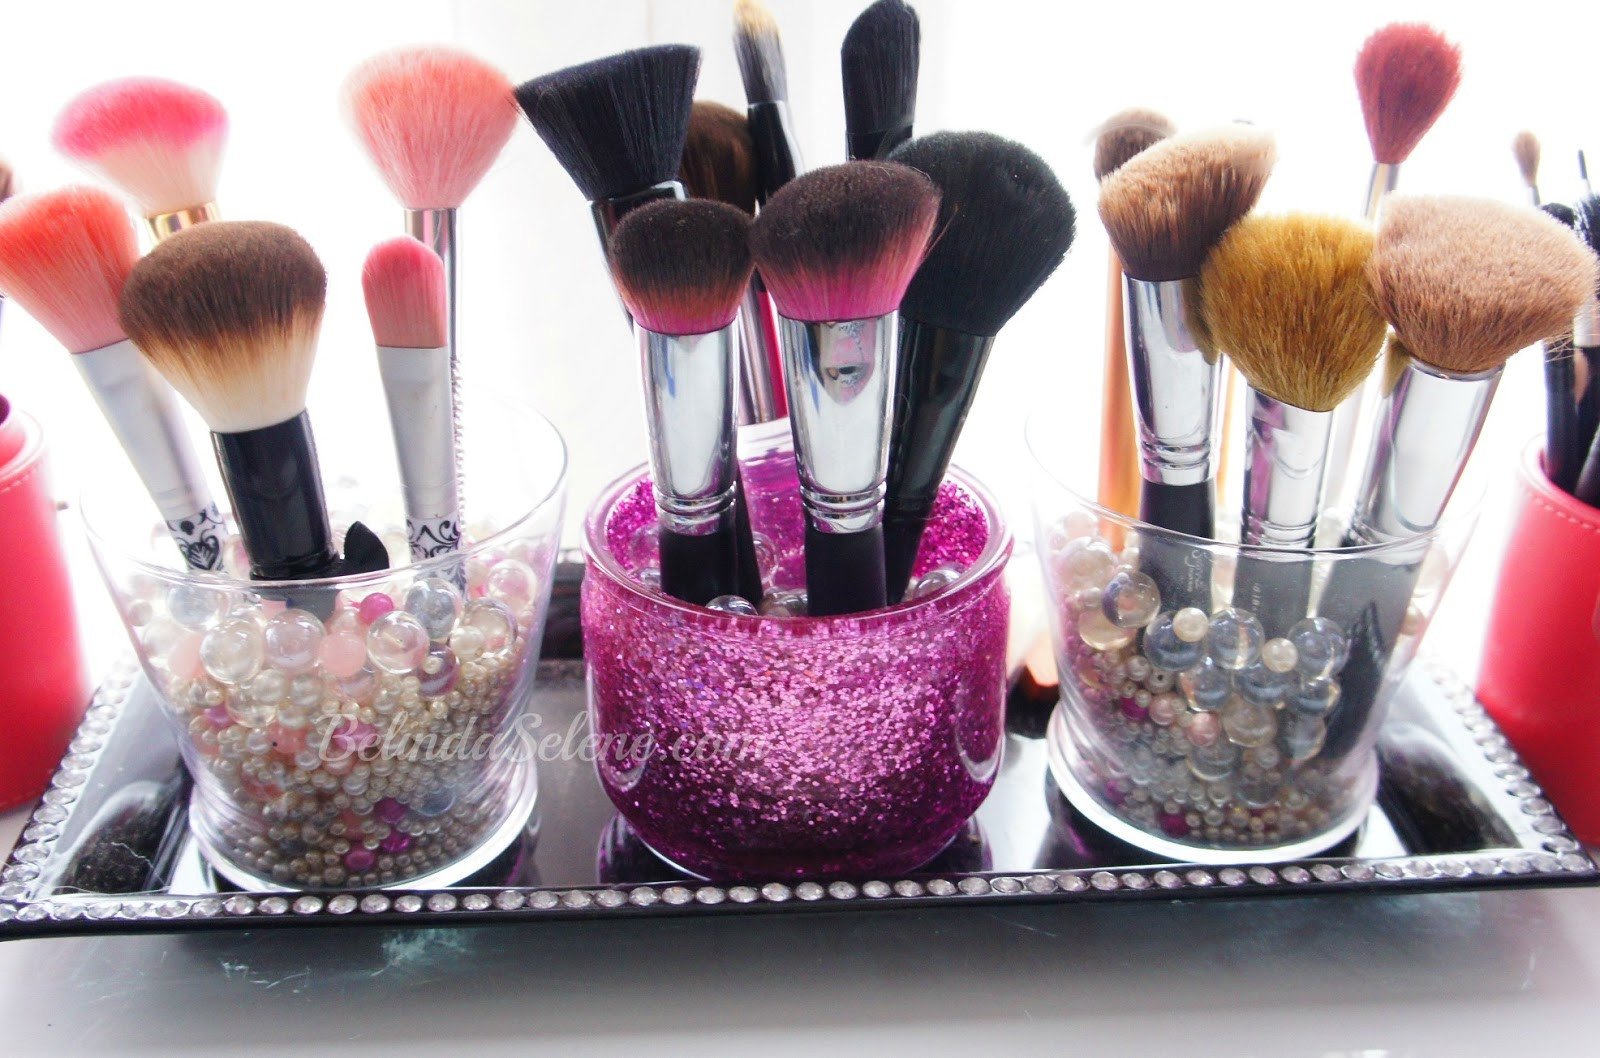 Makeup Brush Organizer DIY
 BelindaSelene DIY Glitter Makeup Brush Holder